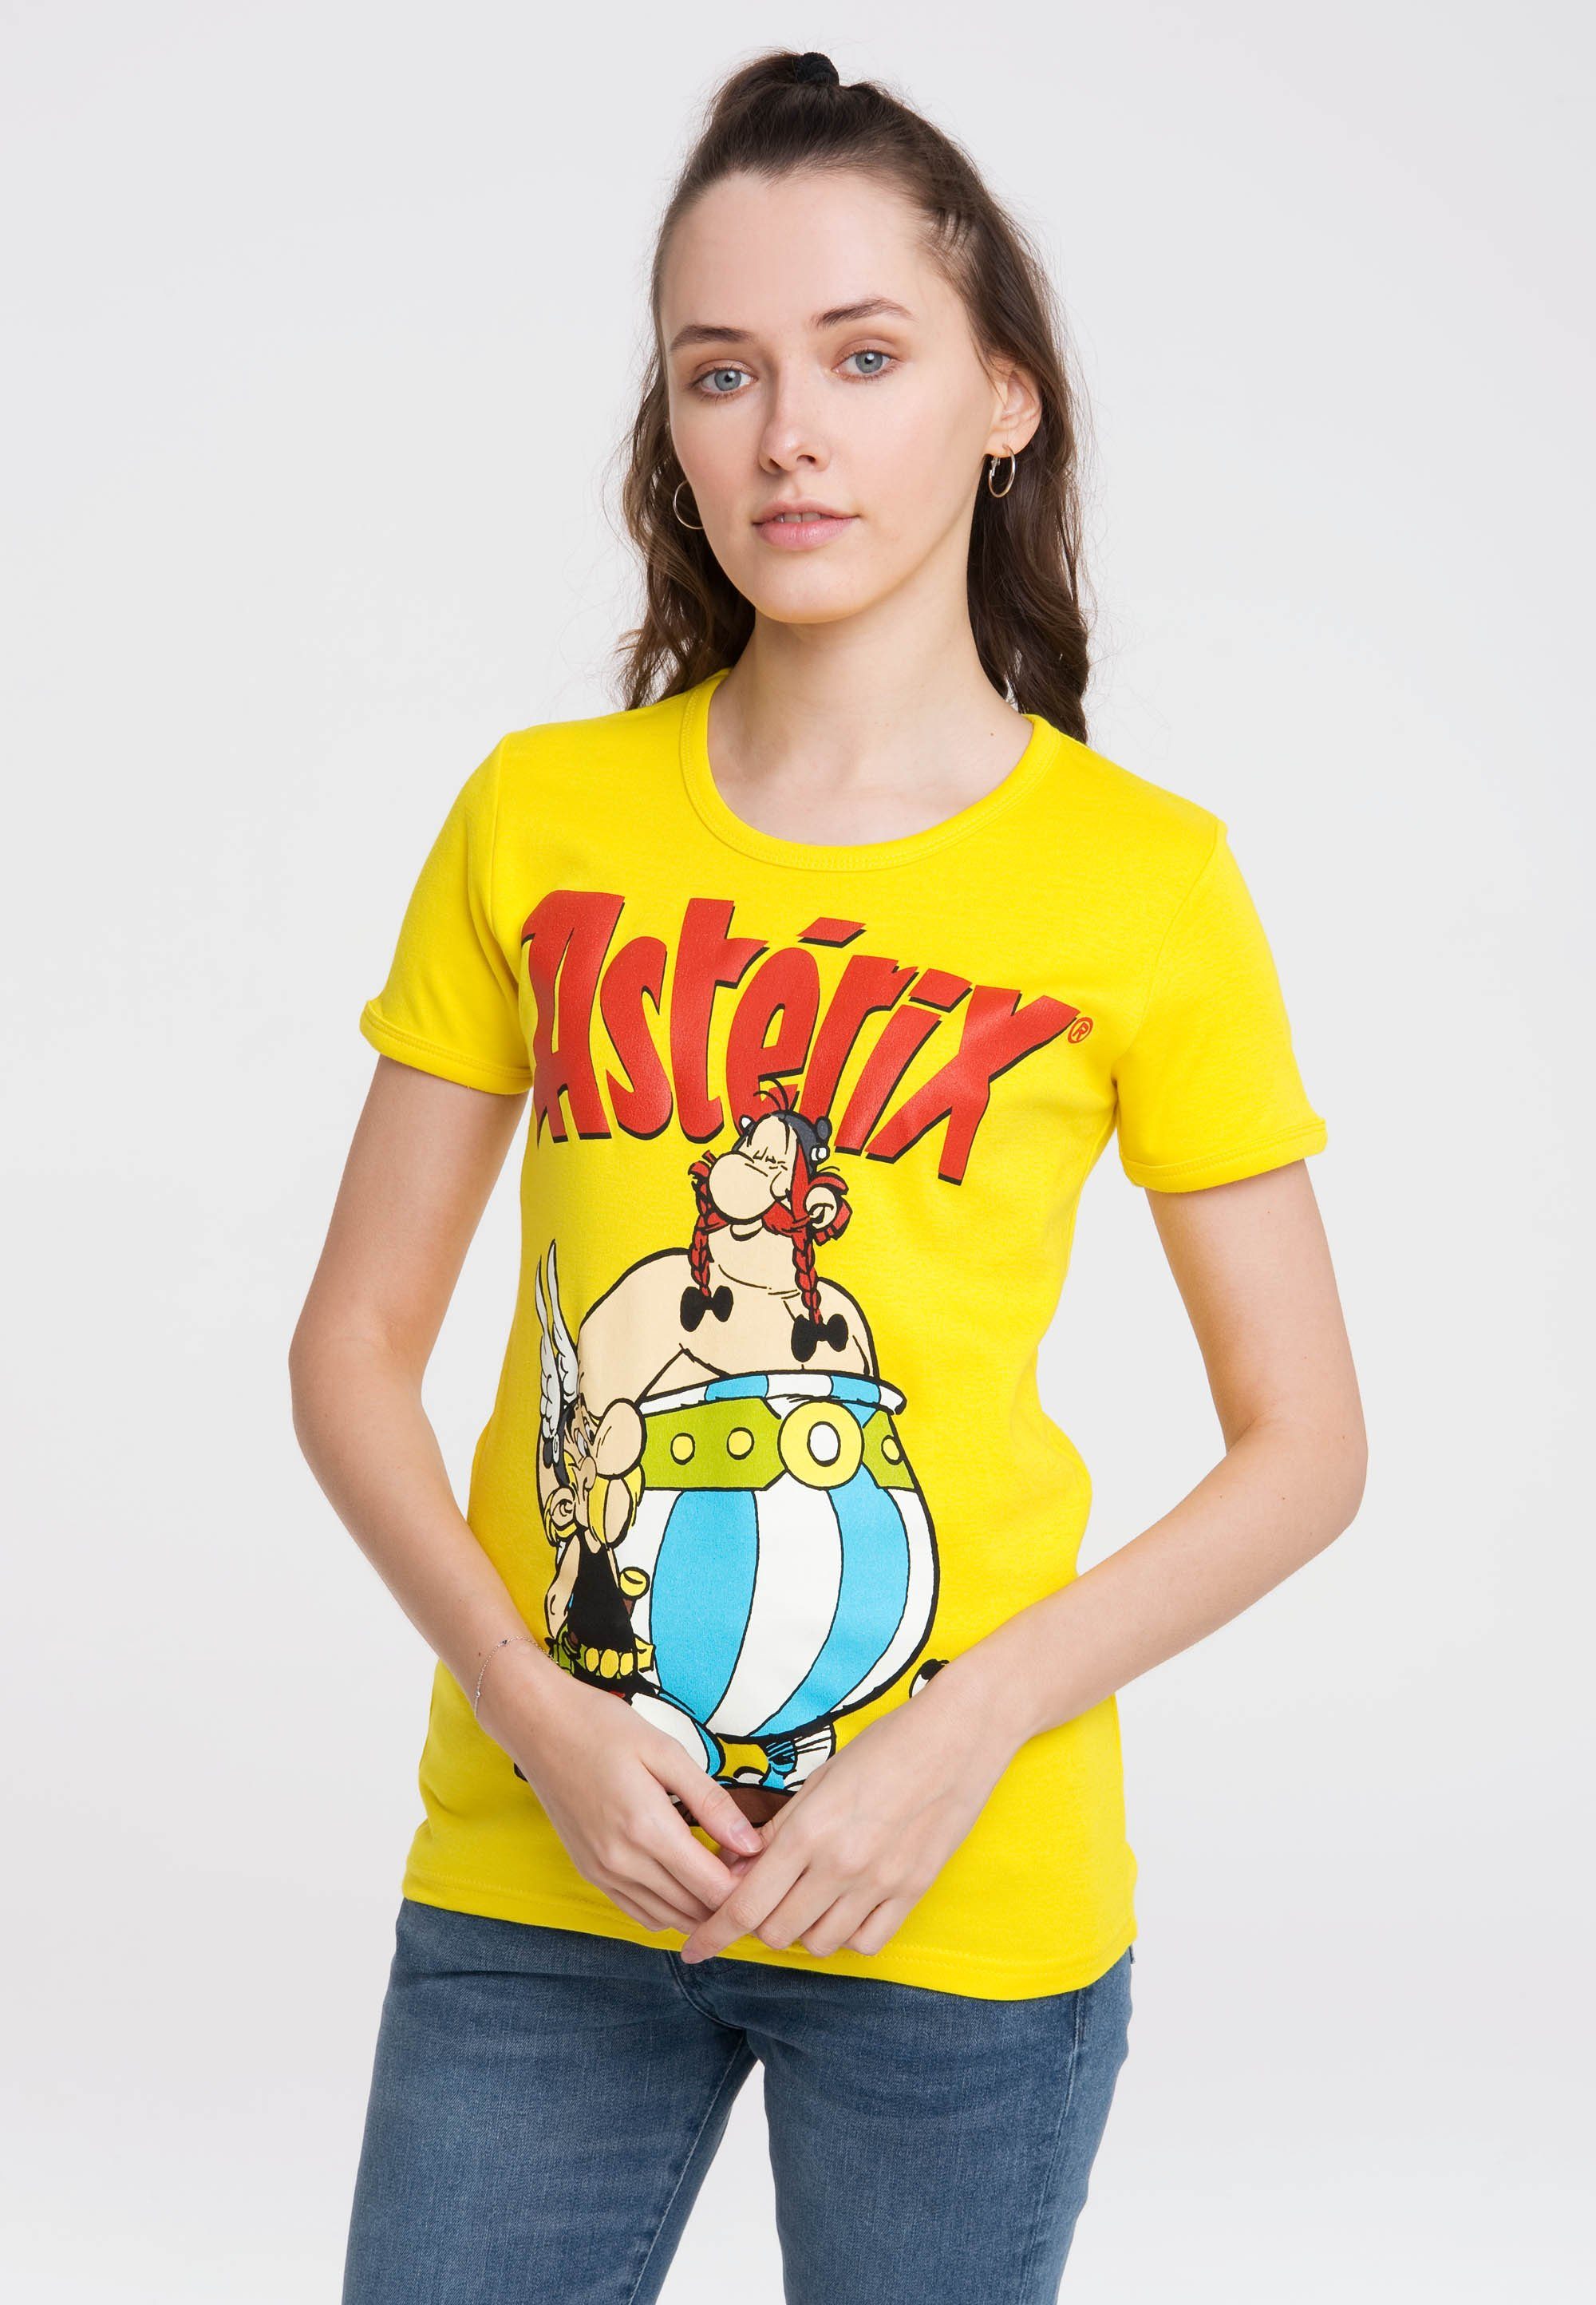 Gallier Asterix LOGOSHIRT mit der T-Shirt Originaldesign lizenziertem